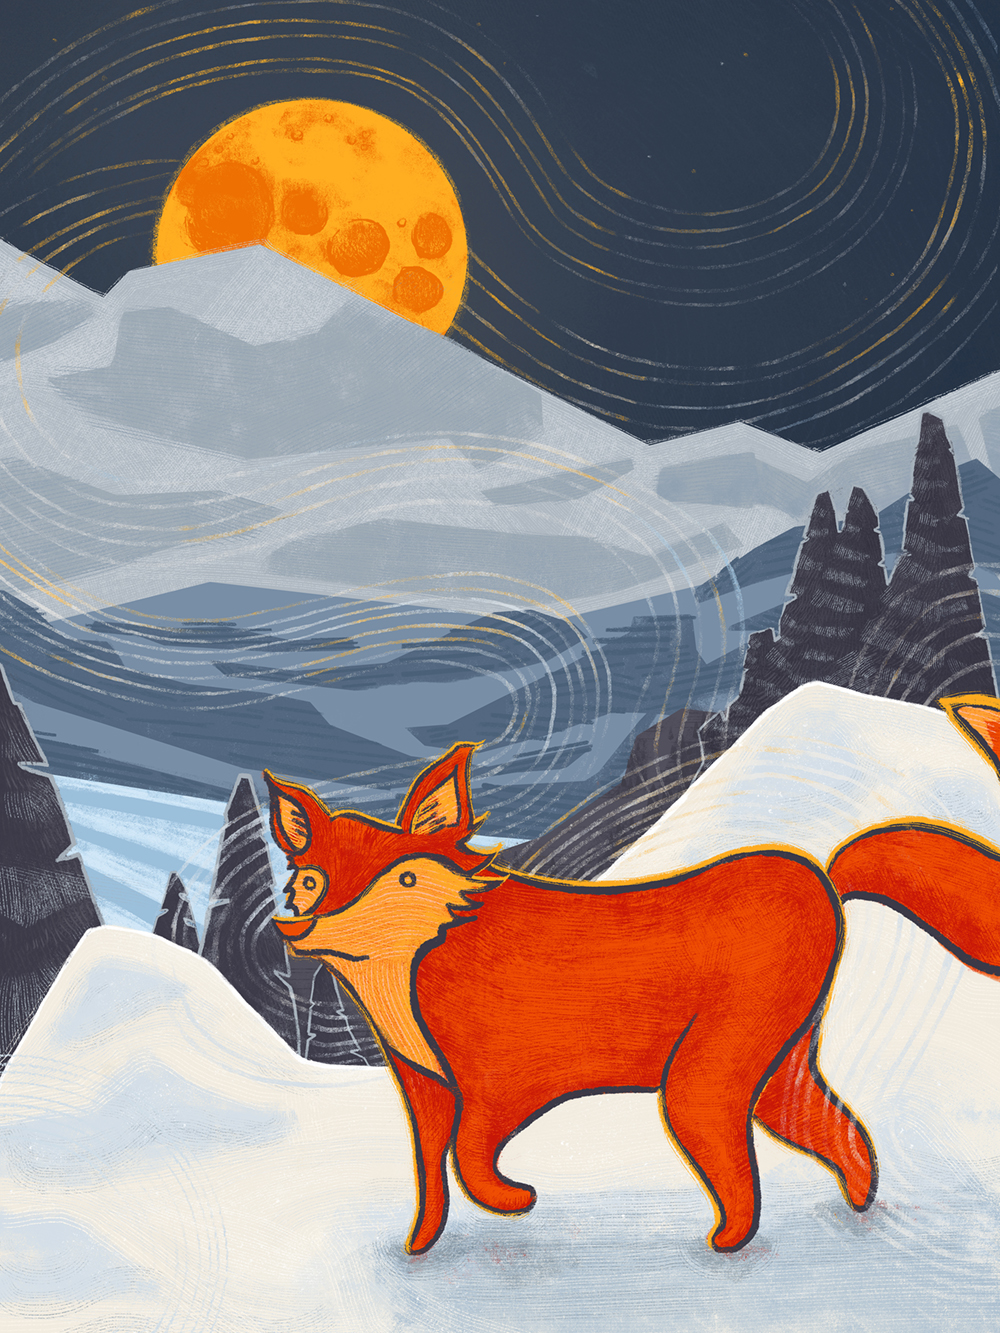 Illustration of a fox in a wintery scene